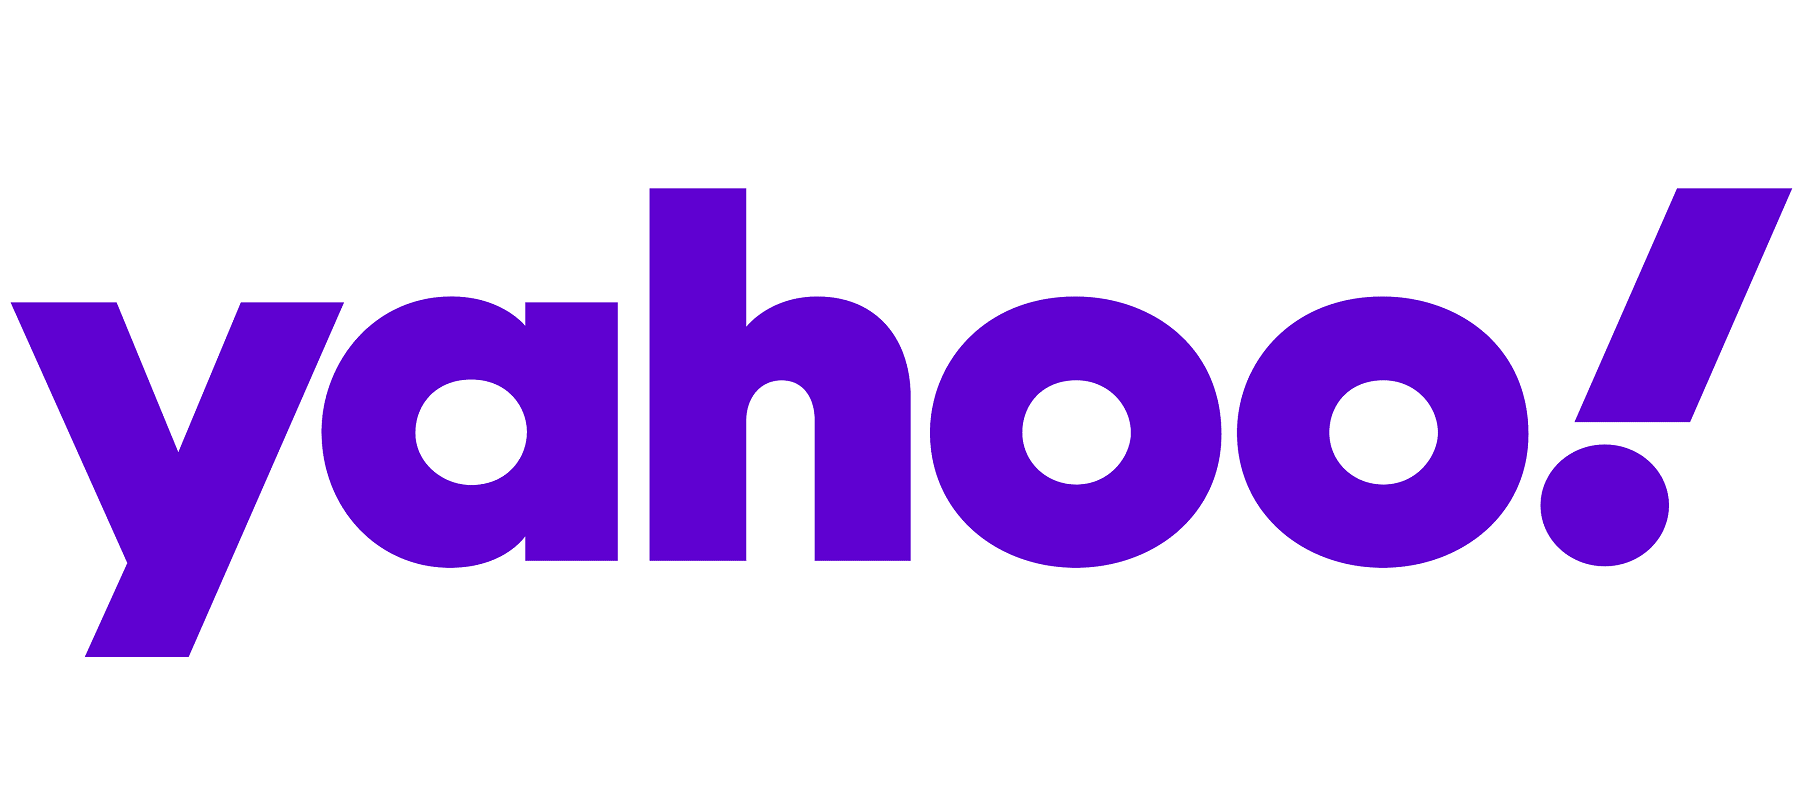 Brightcove to power Yahoo Inc.’s worldwide streaming capabilities